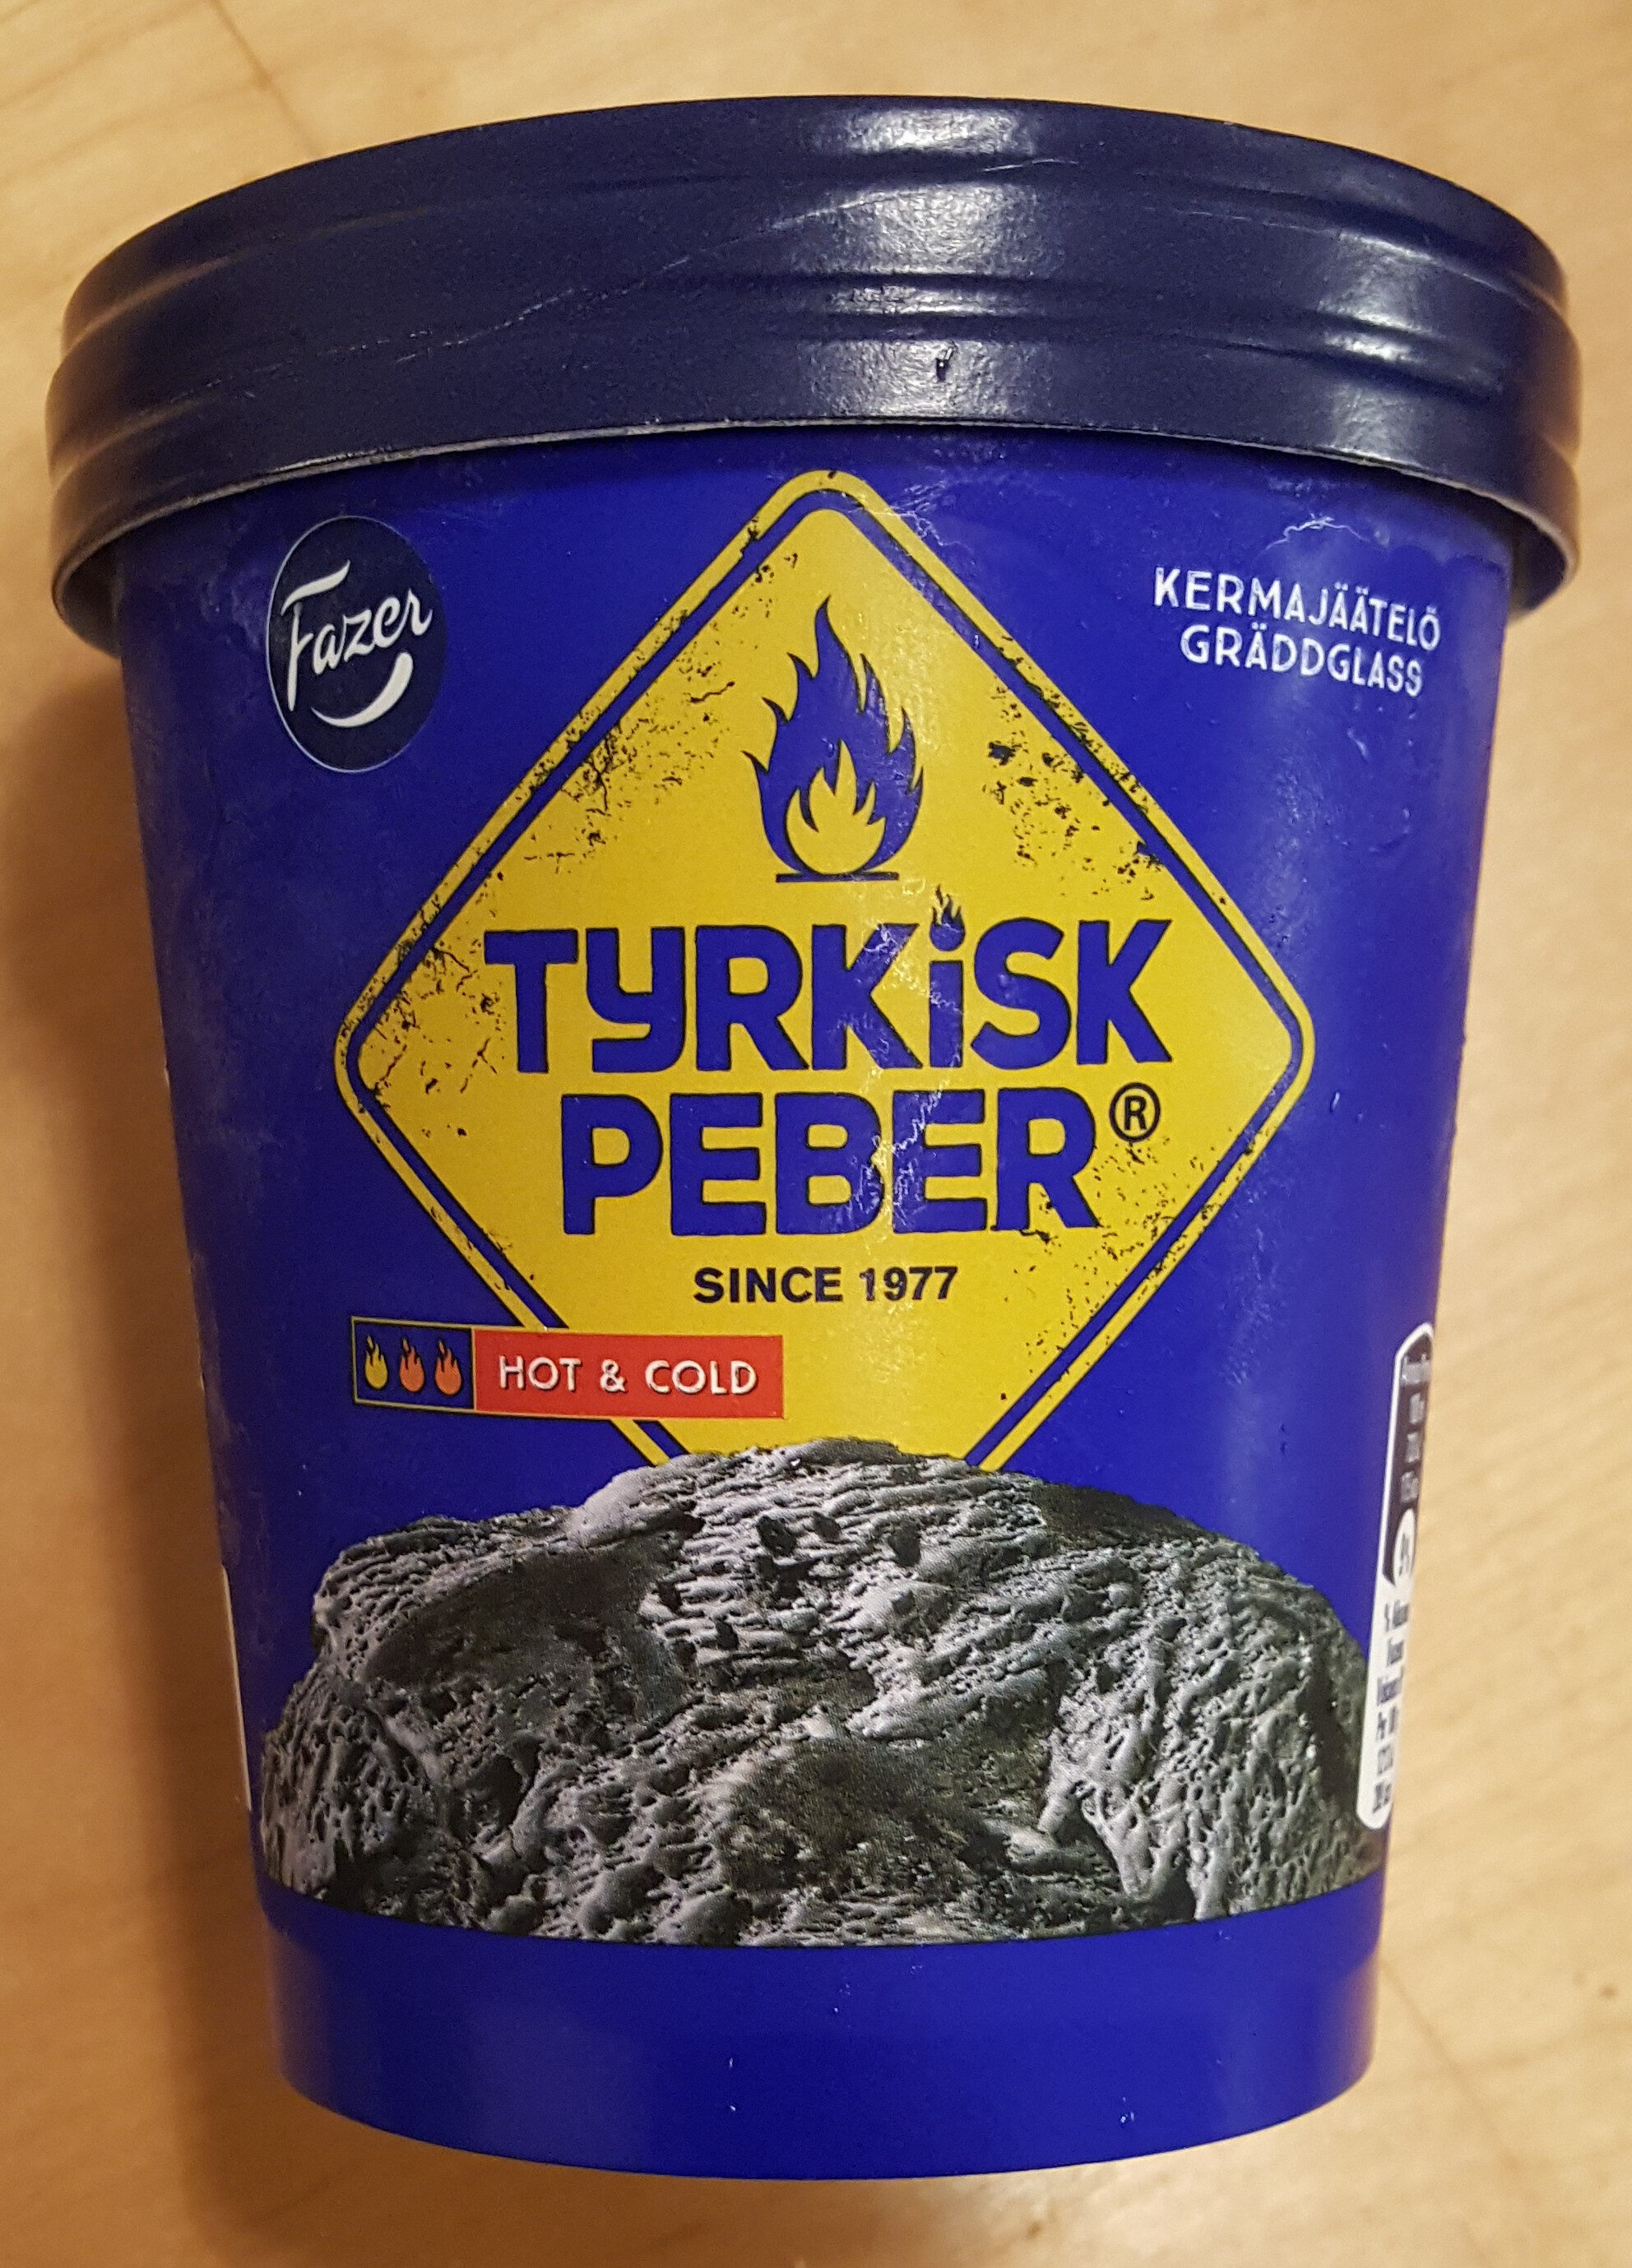 Tyrkisk Peber Gräddglass - Produkt - sv